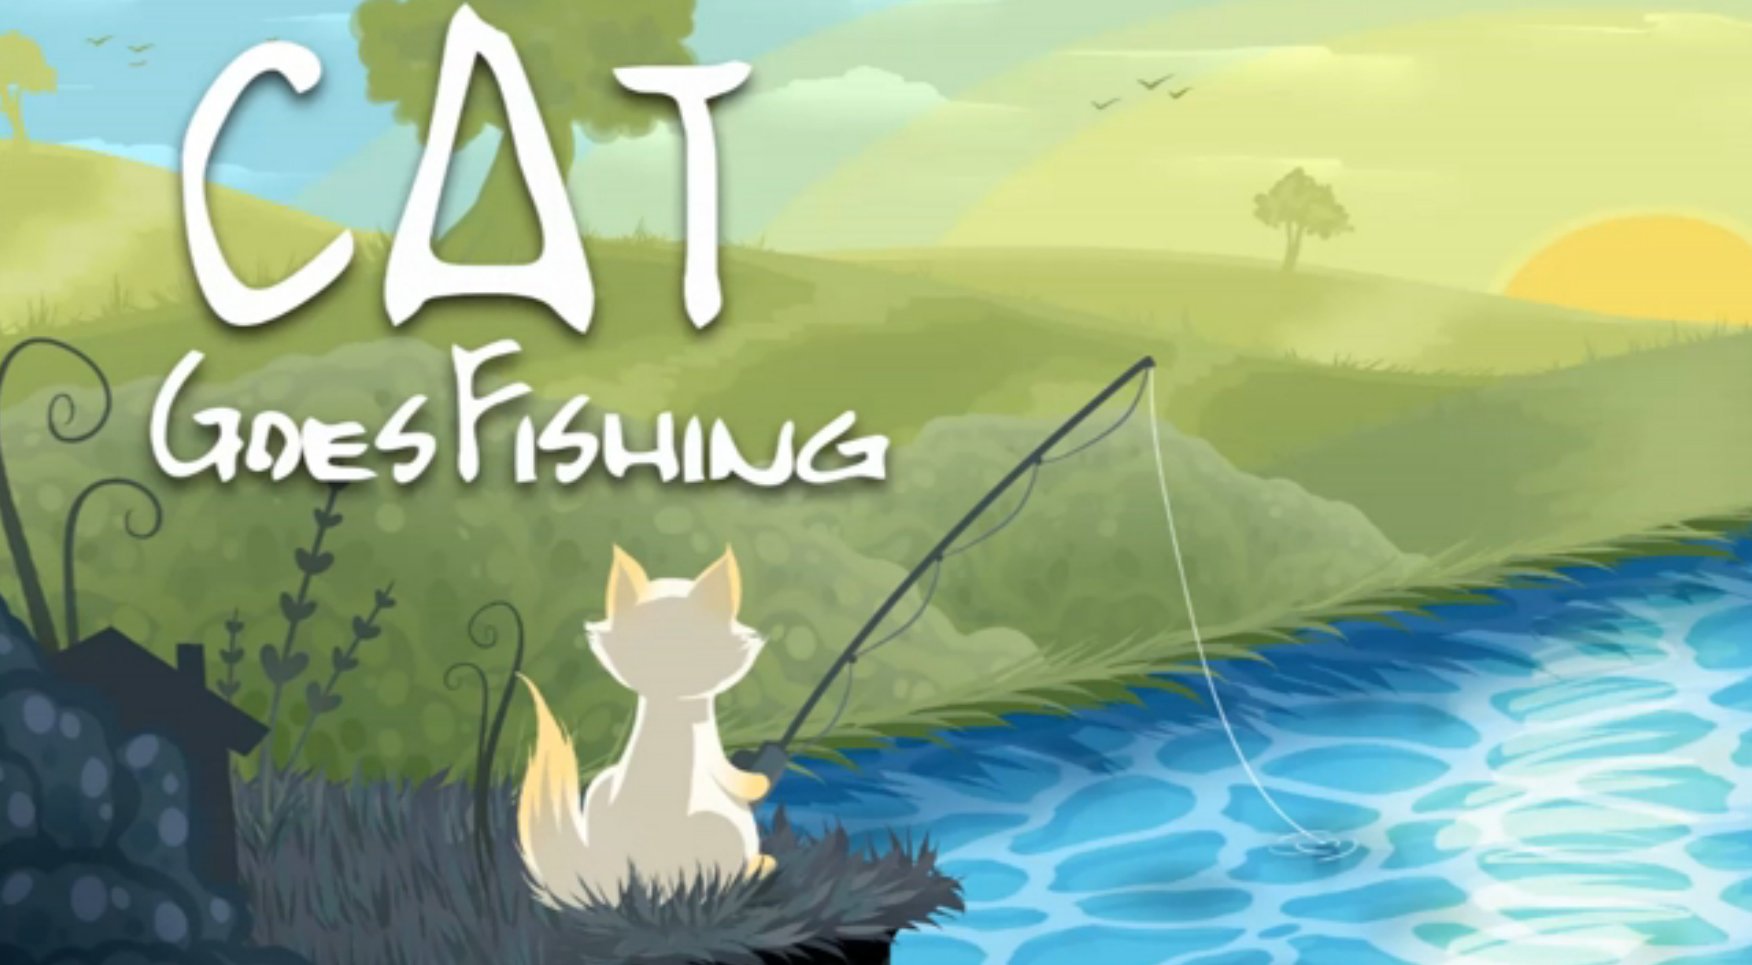 Cat Goes Fishing Free Download Mac